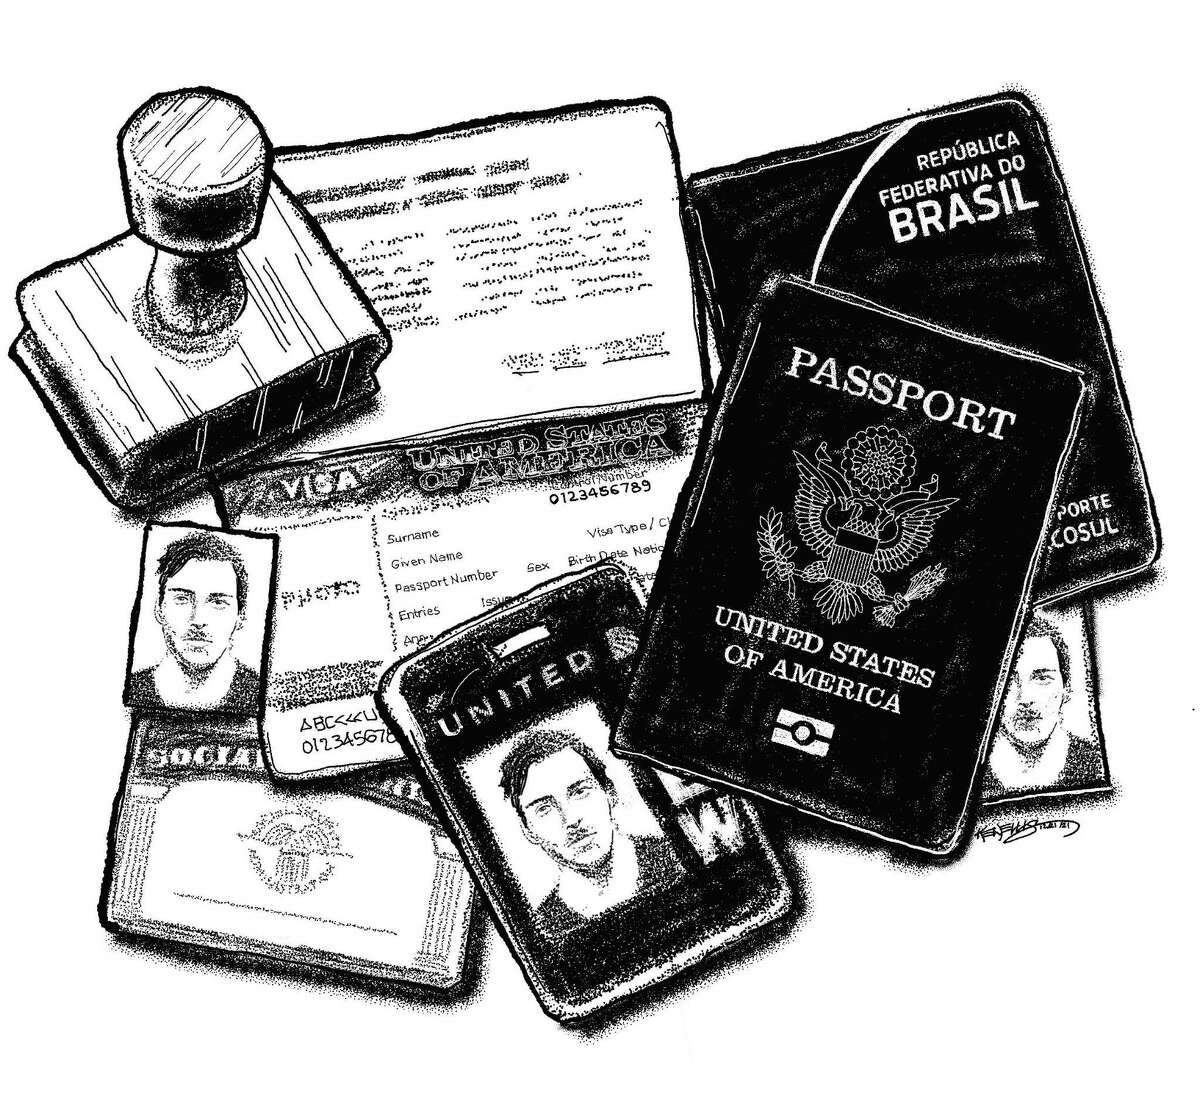 Illustration for story on passport fraud